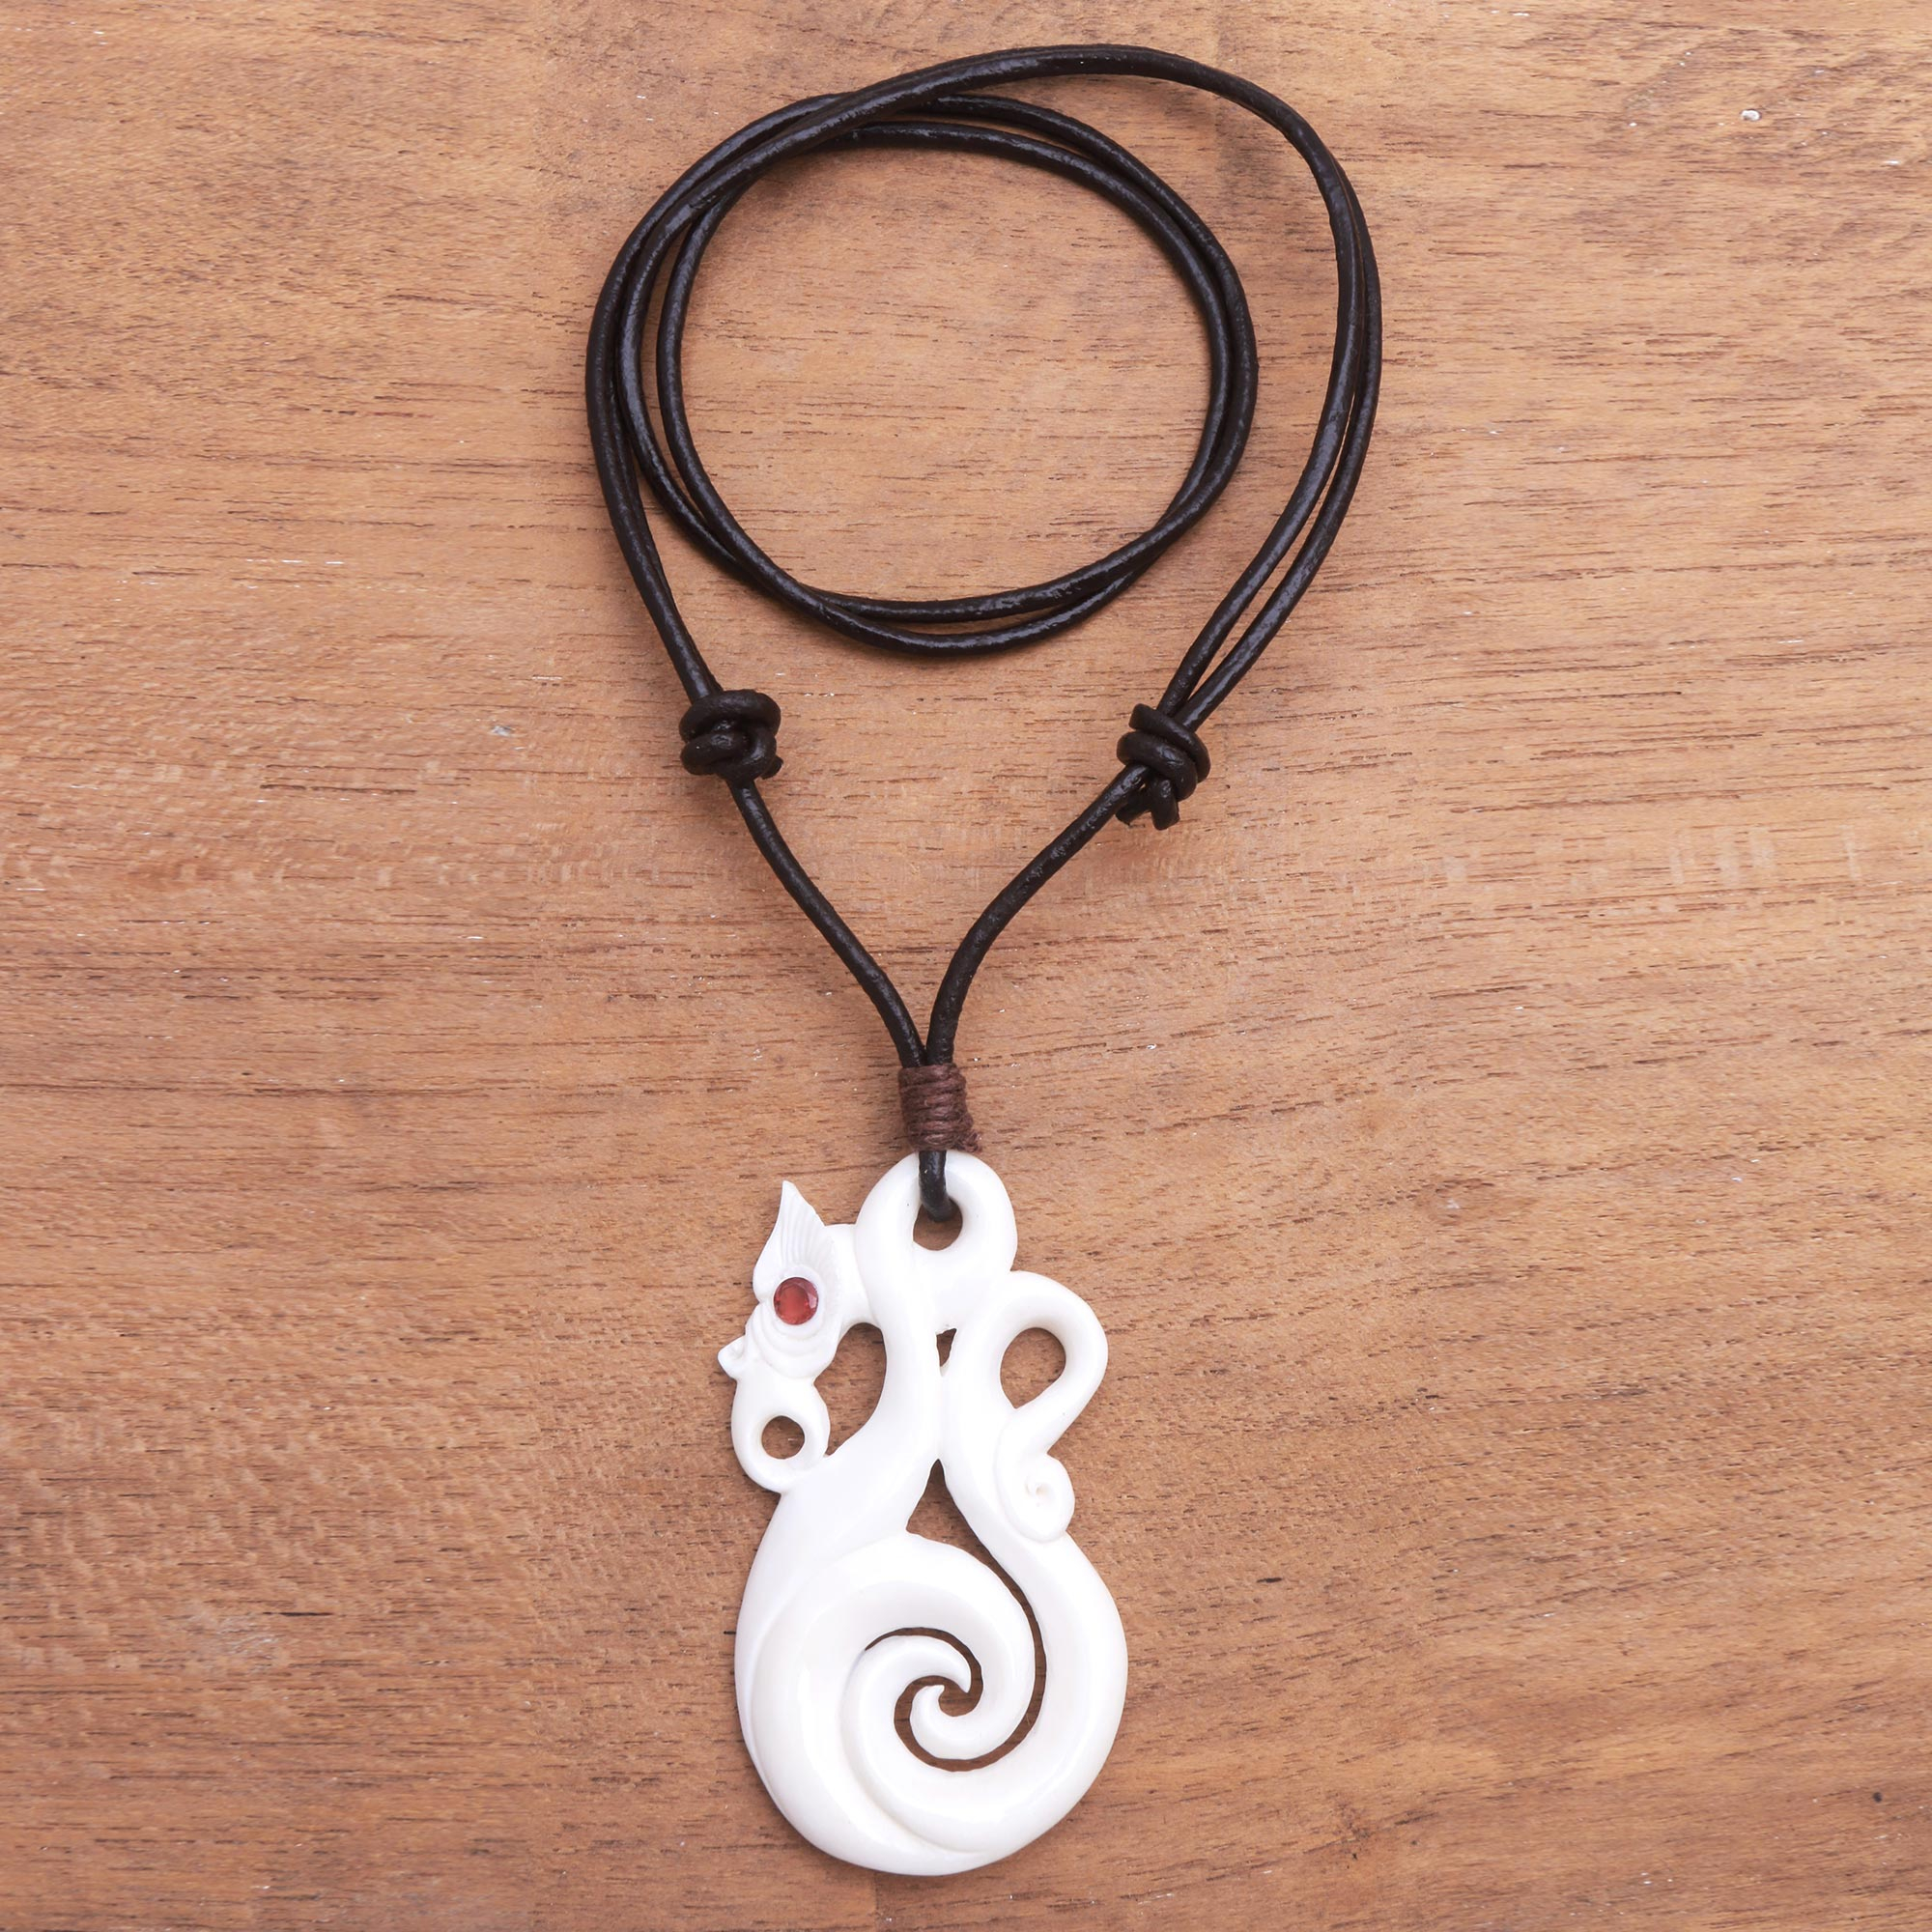 Bone Maori Koru Pendant Leather Cord Necklace